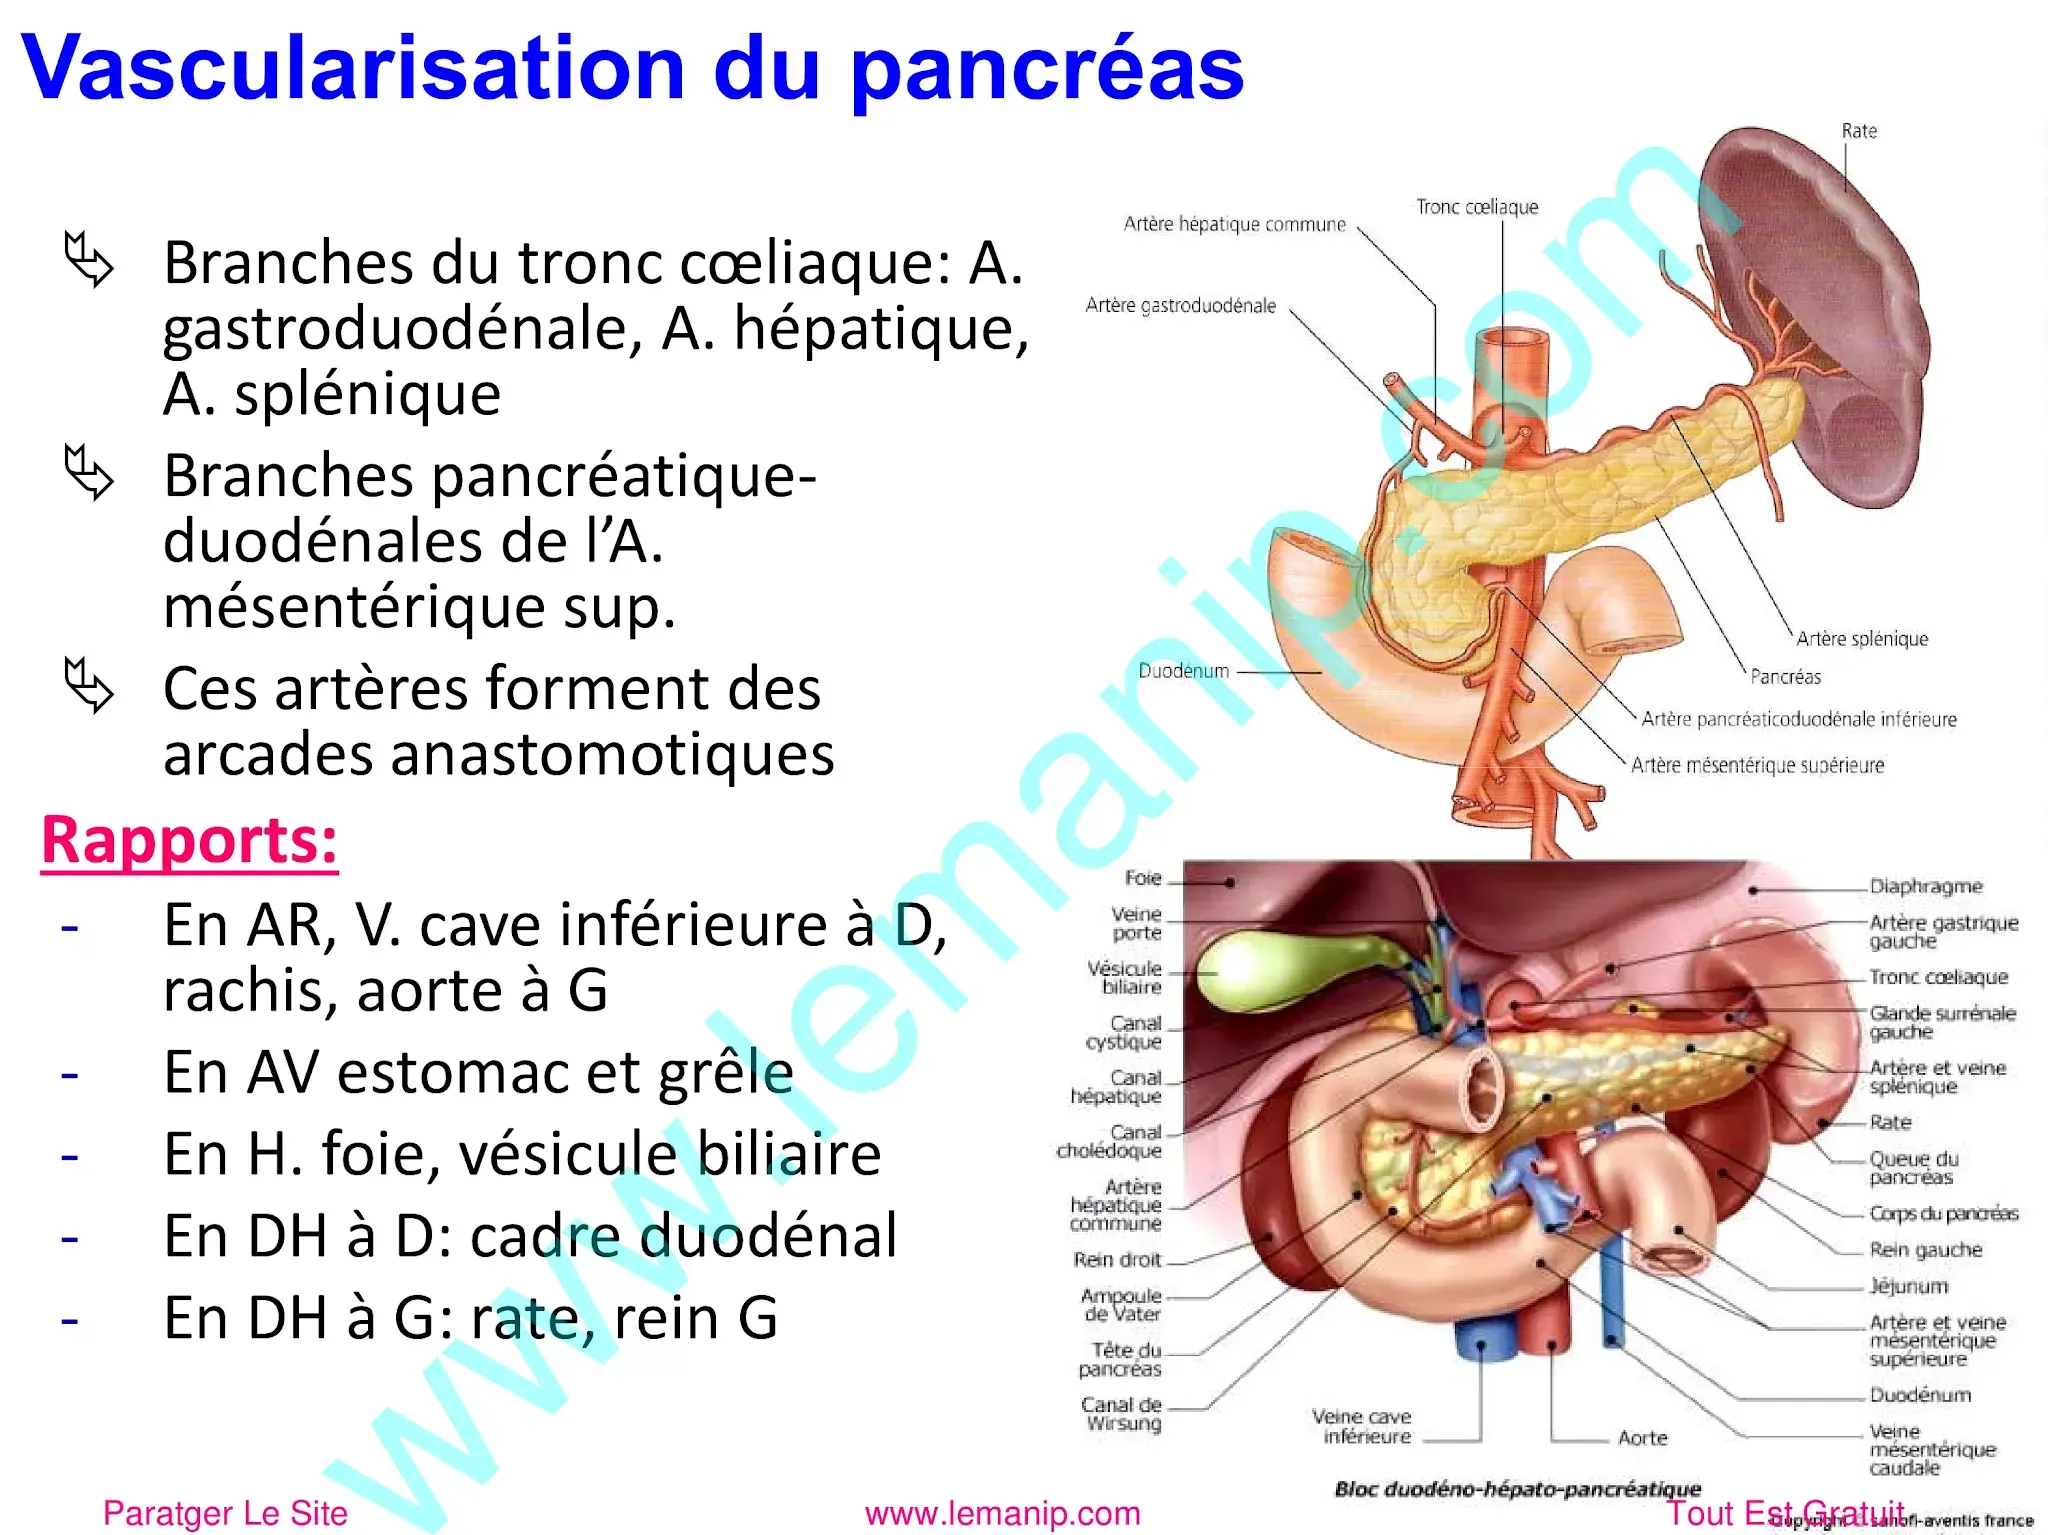 Vascularisation du pancréas